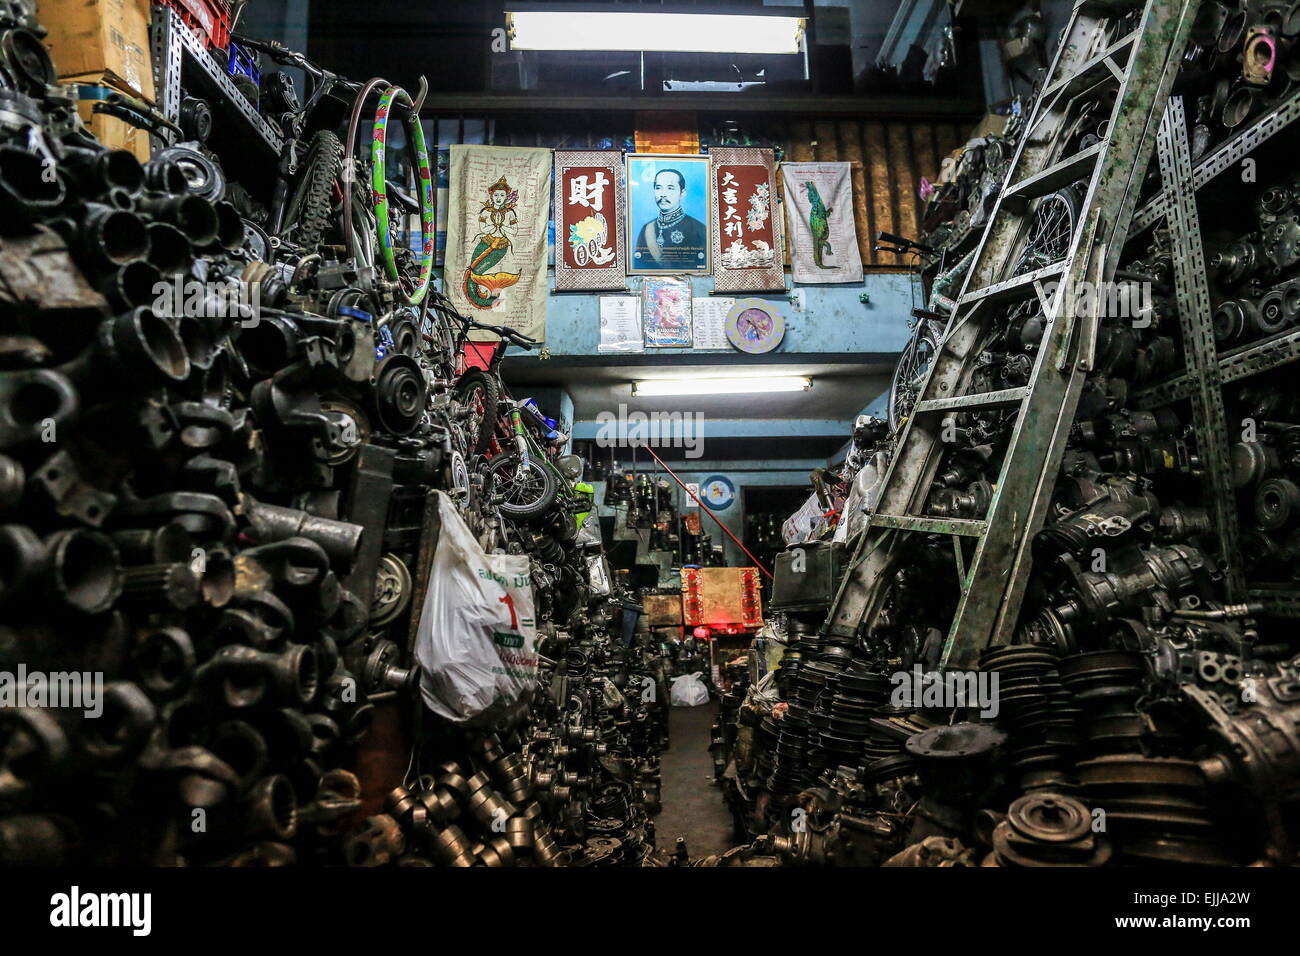 Feb 25, 2015 - Bangkok, Thailand - View from inside a shop where we